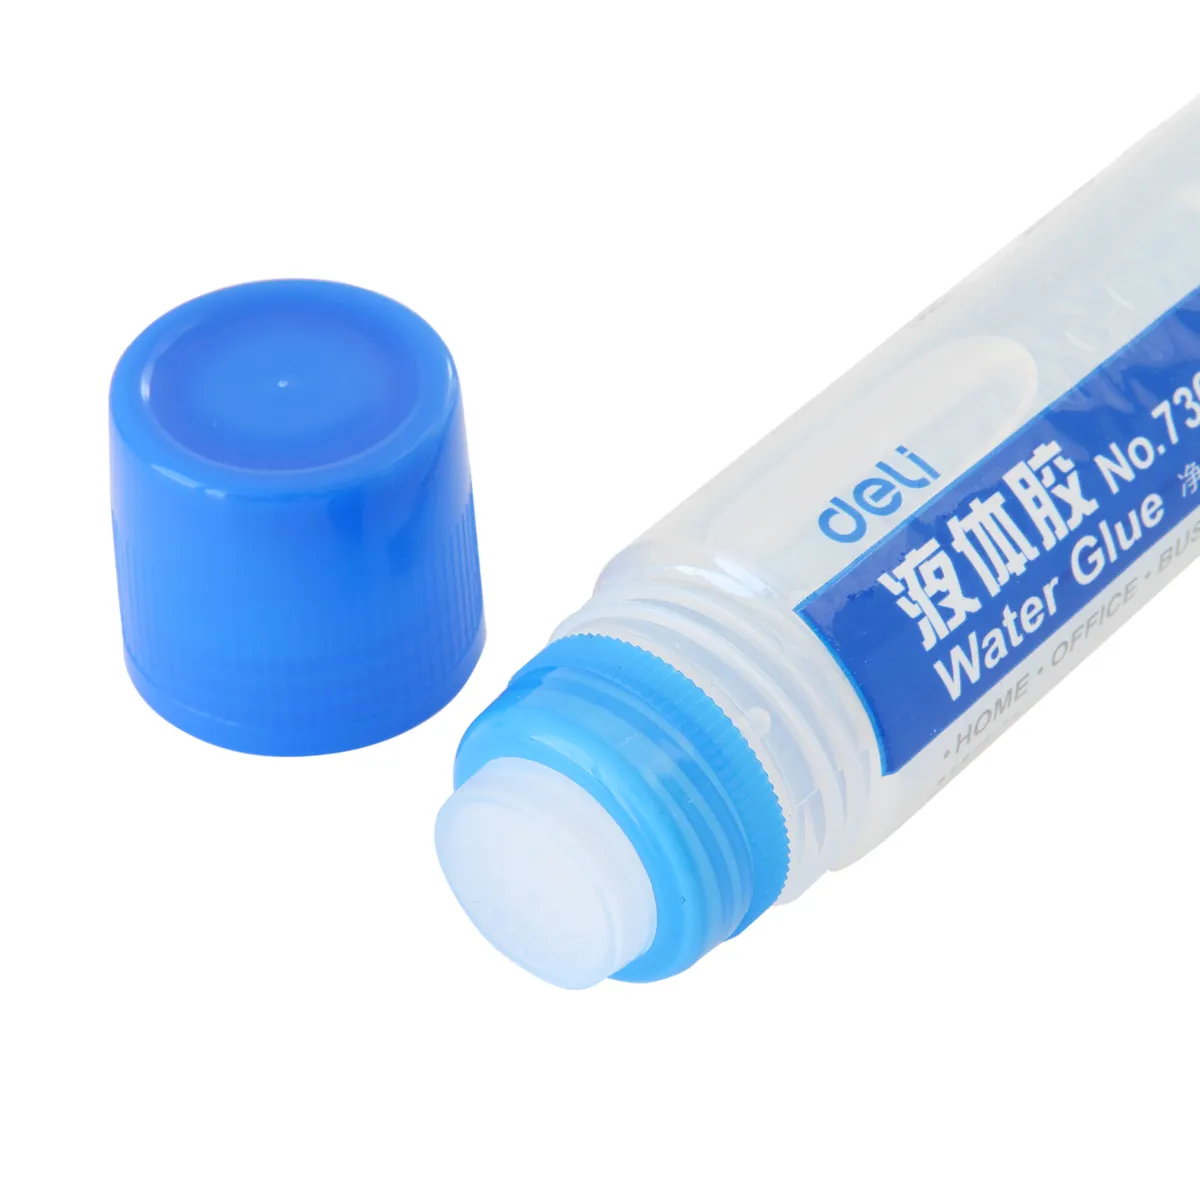 Uniglue Universal Super Oily glue Super glue Foreign trade hot glue